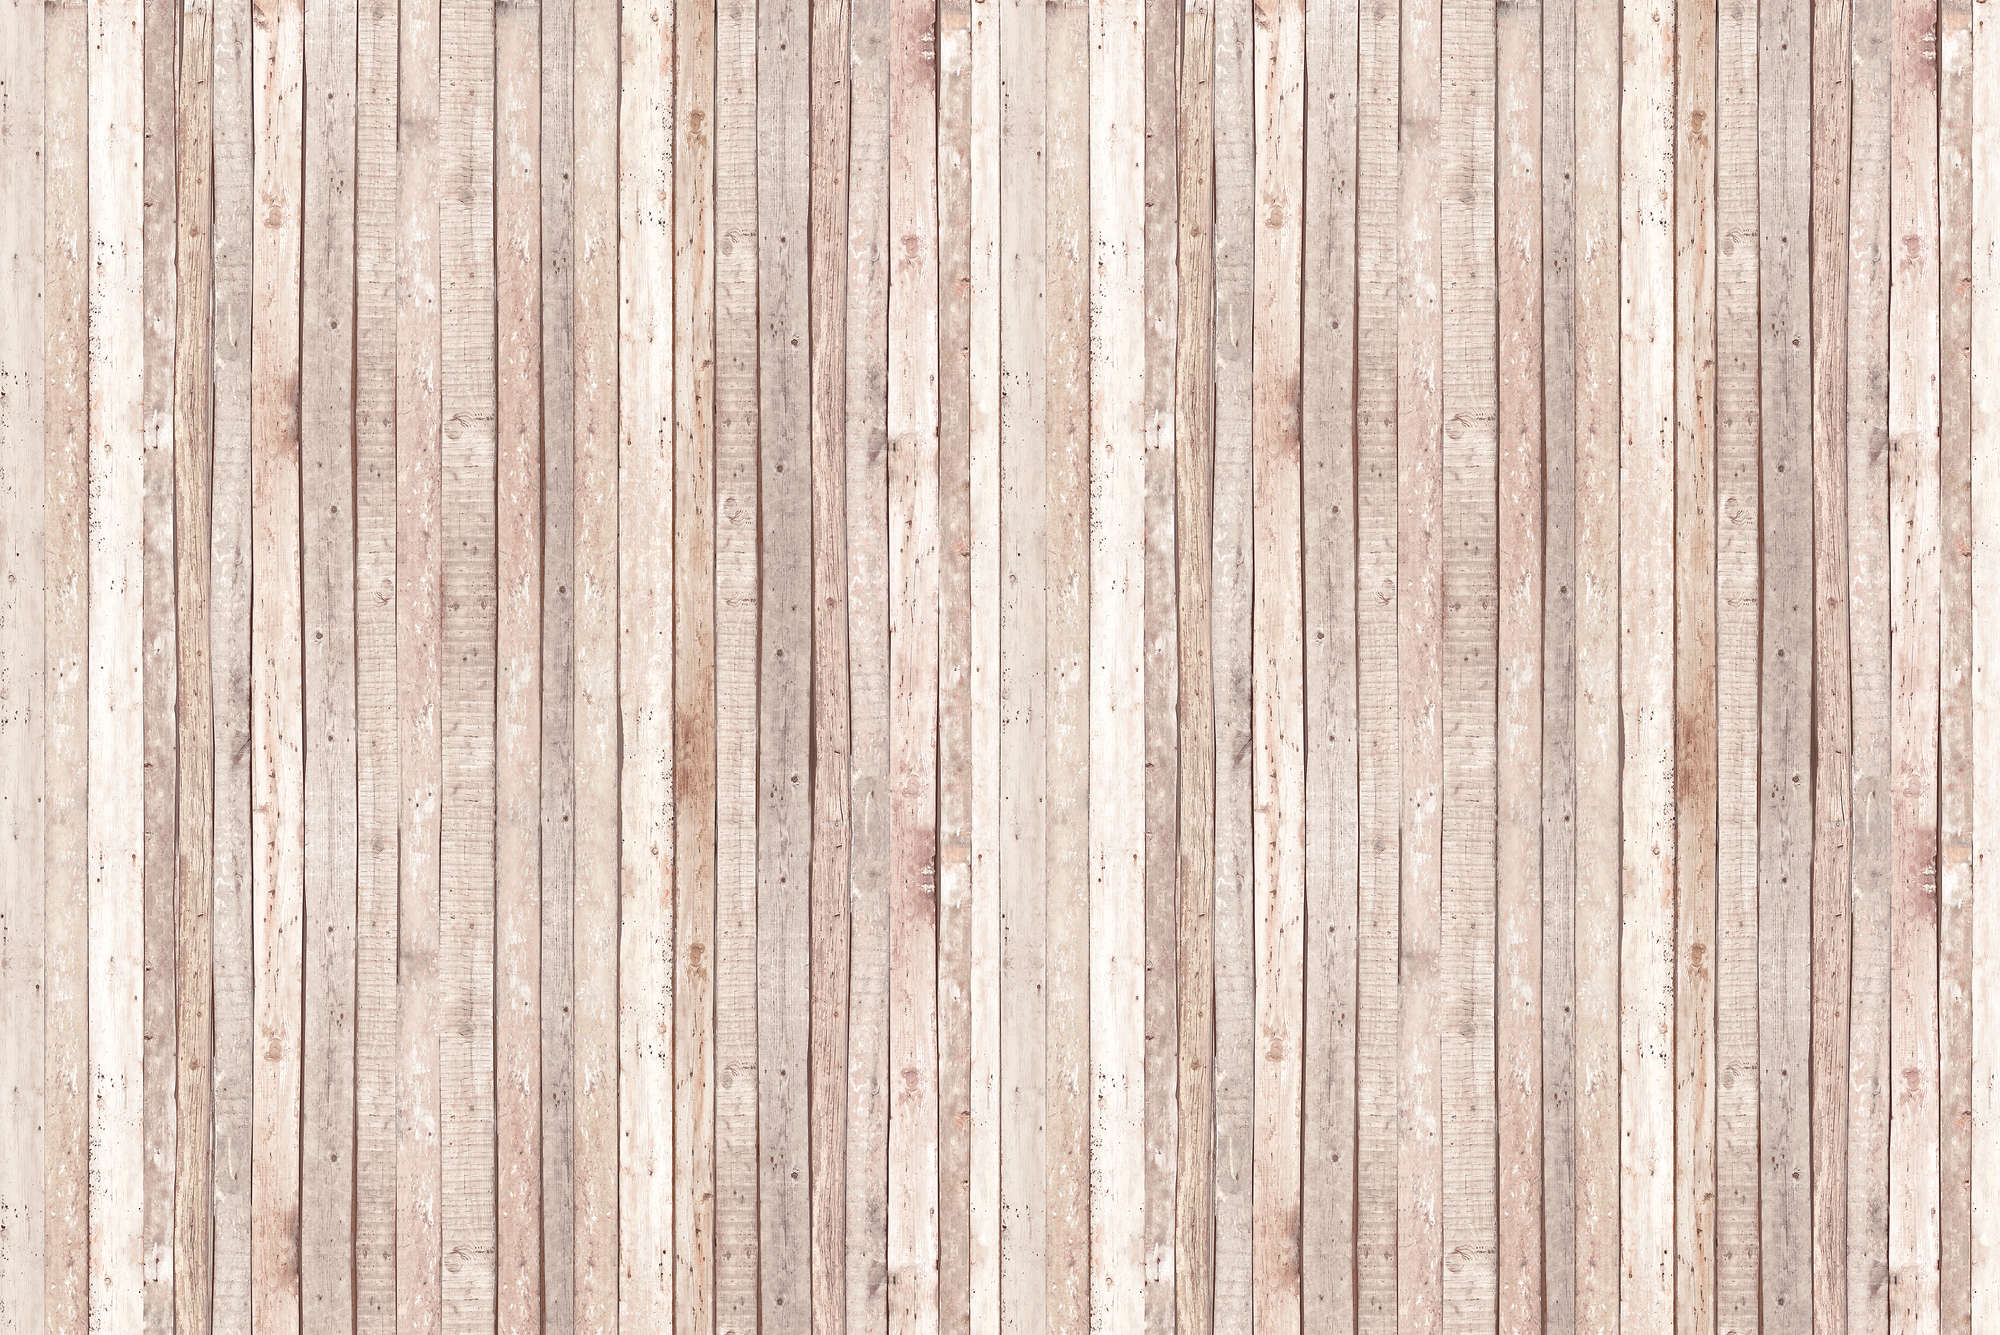             Fototapete Wand aus Holzbrettern – Mattes Glattvlies
        